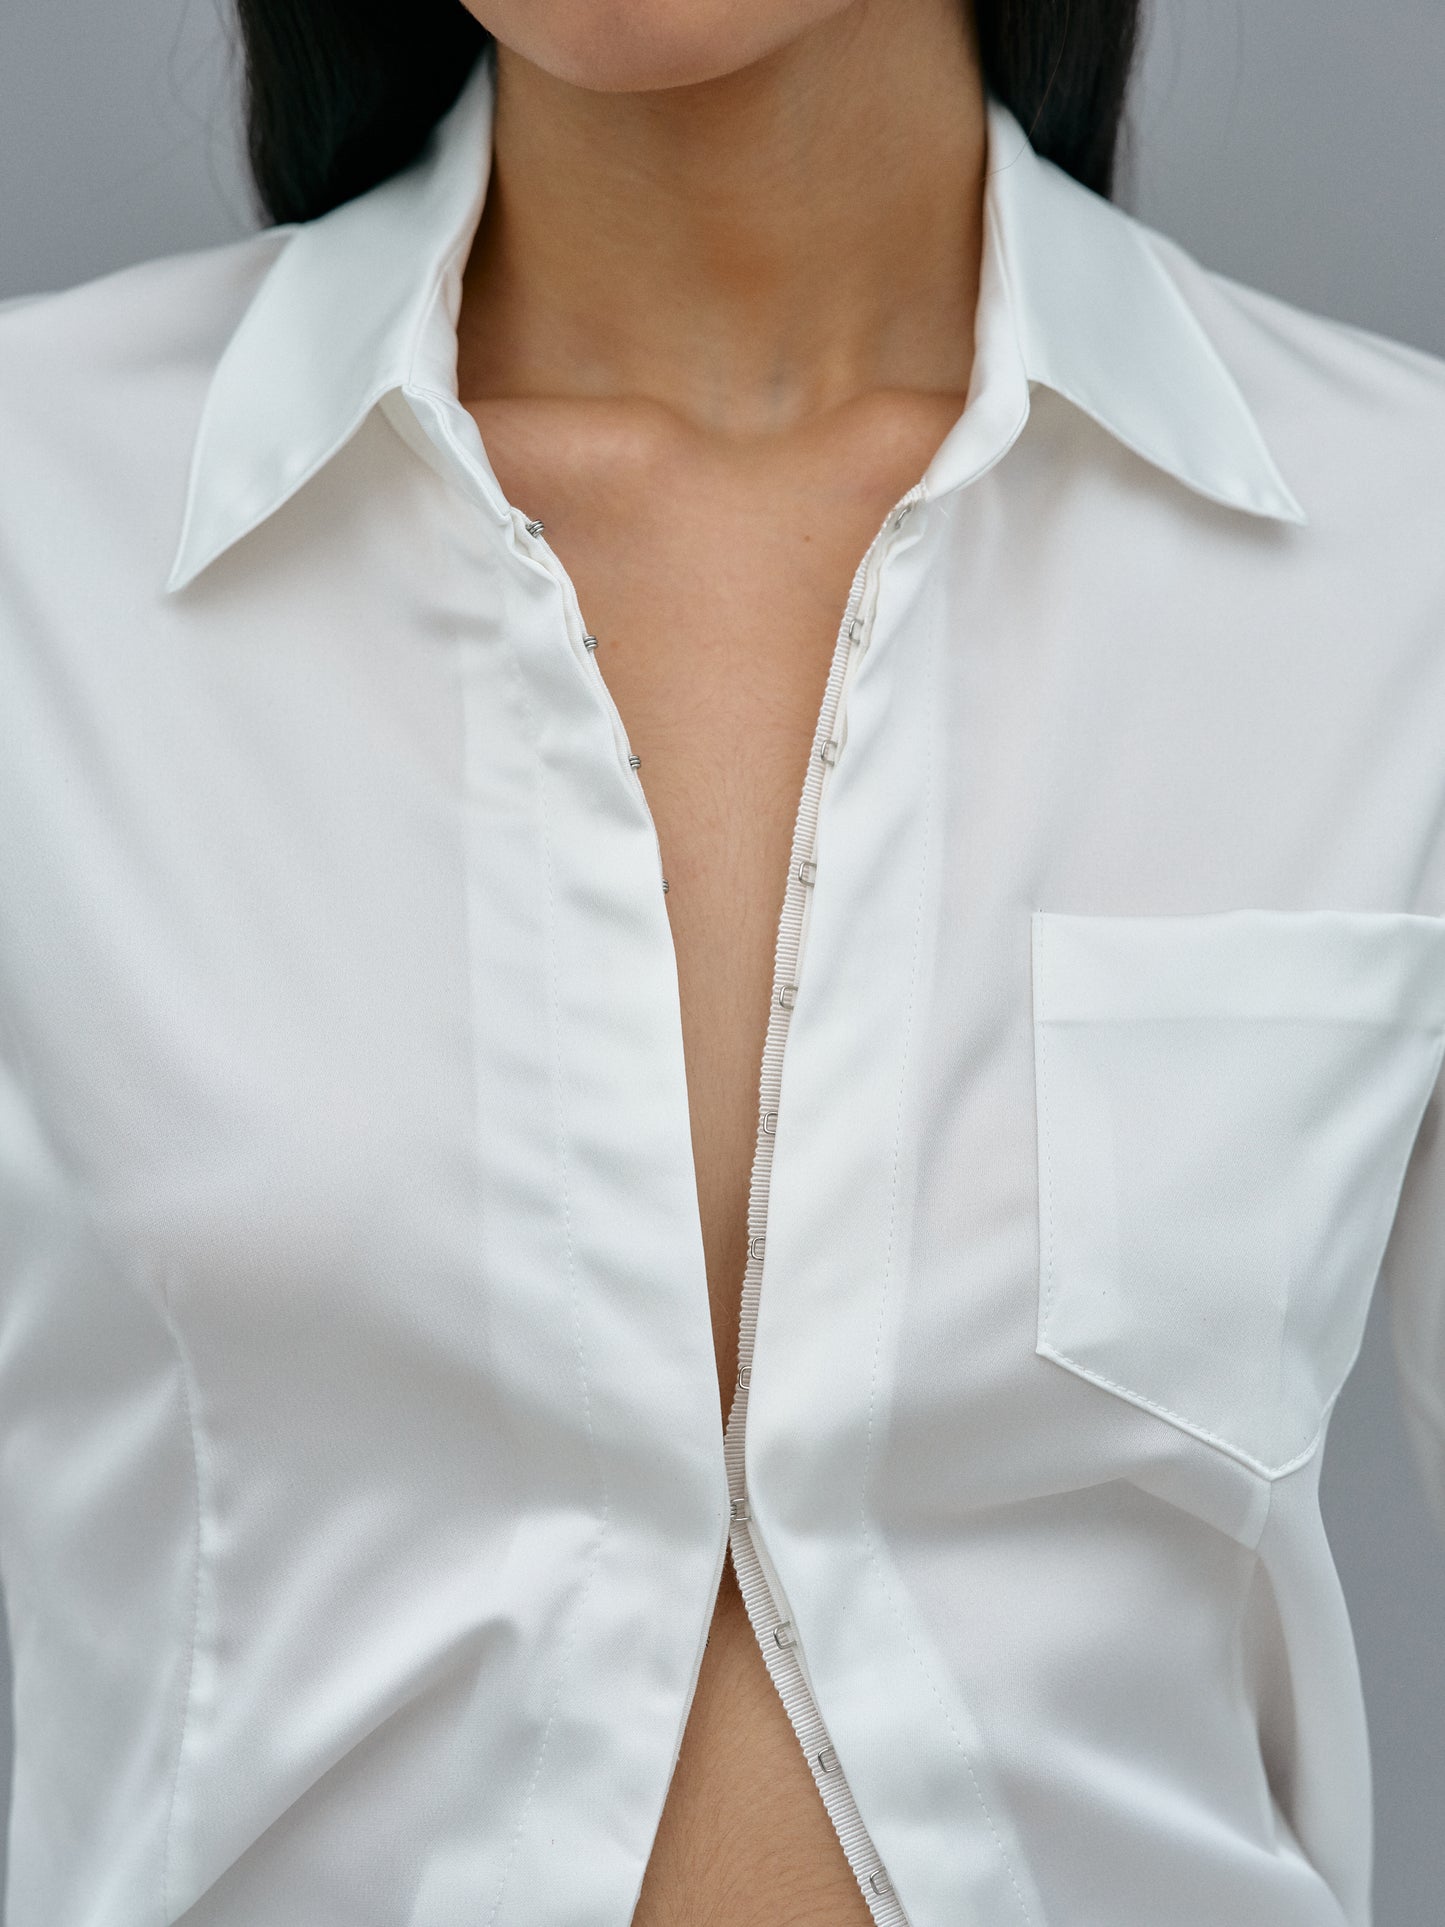  uhnmki Corset Tops for Women Cotton Button Down Shirt